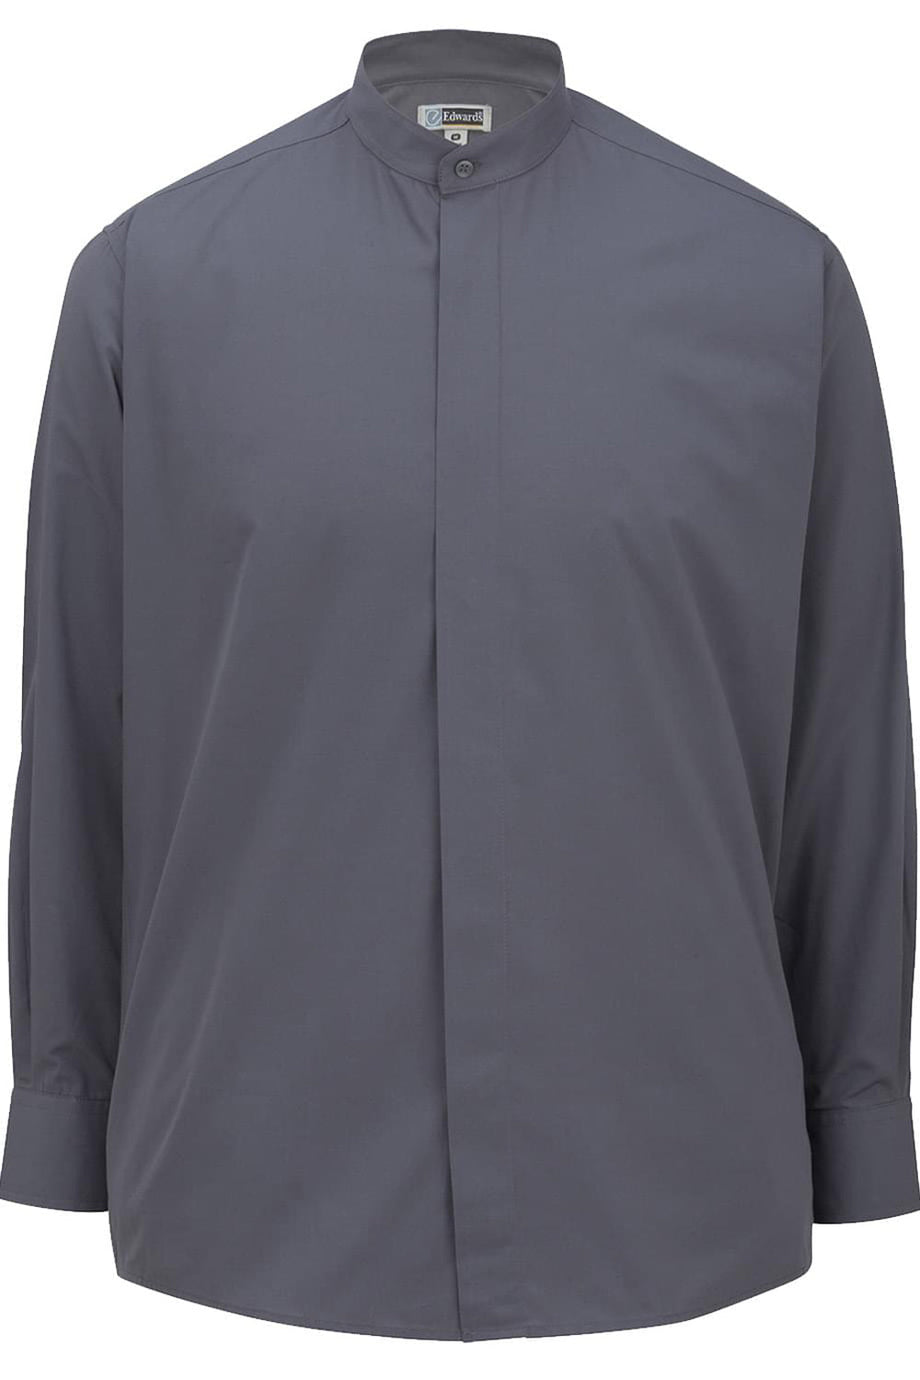 Edwards S / Regular Men's Banded Collar Broadcloth Shirt - Dark Grey